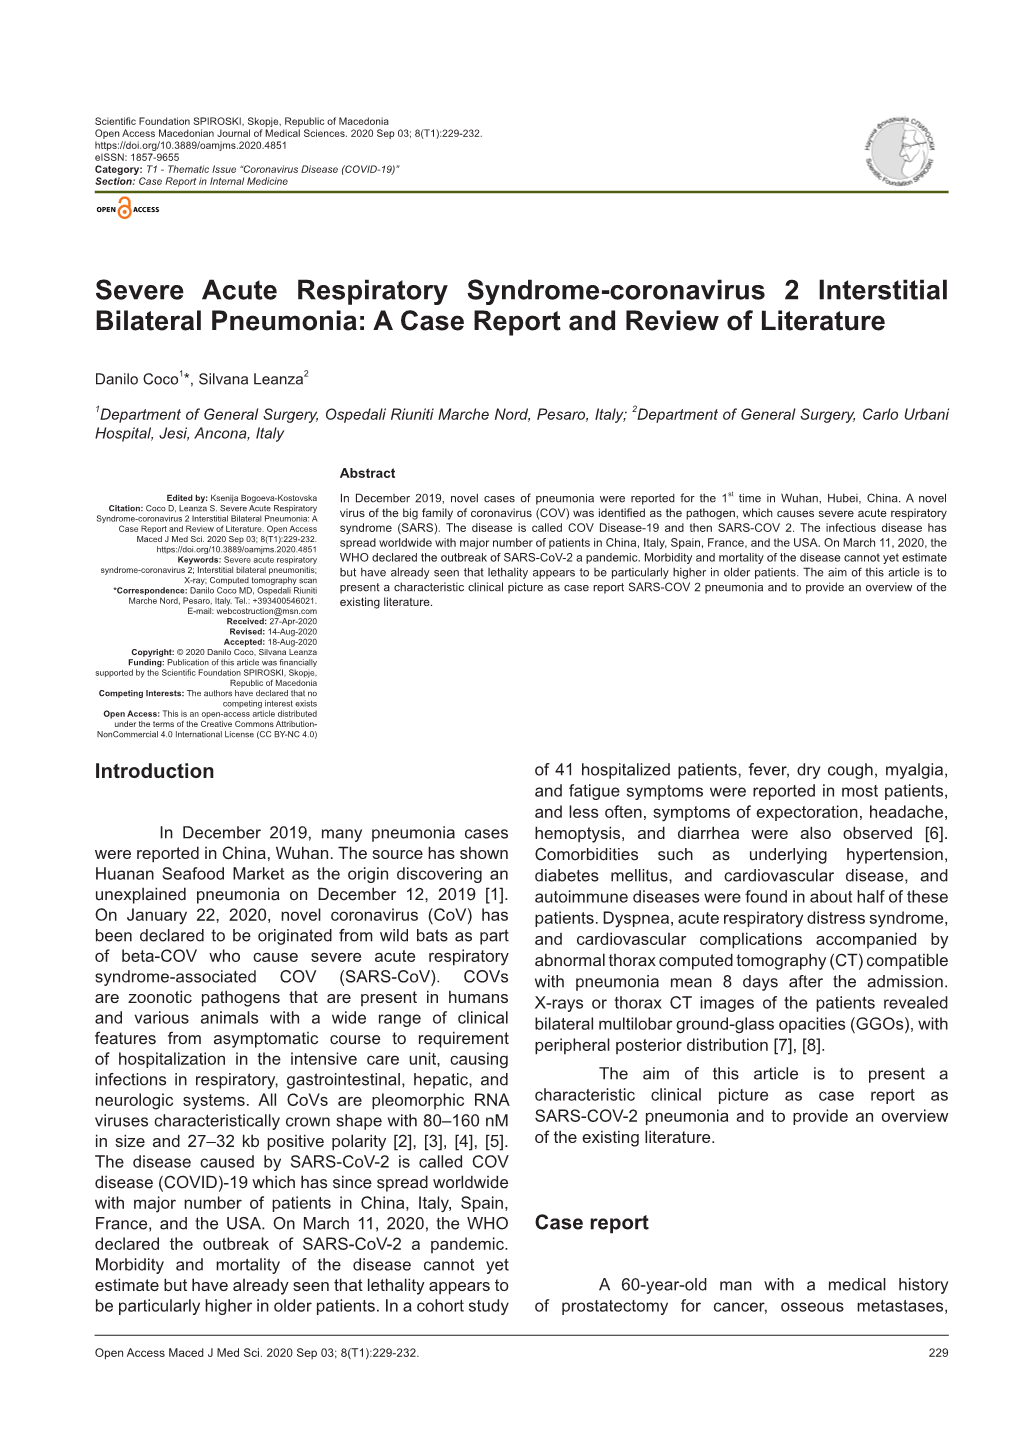 Severe Acute Respiratory Syndrome-Coronavirus 2 Interstitial Bilateral Pneumonia: a Case Report and Review of Literature